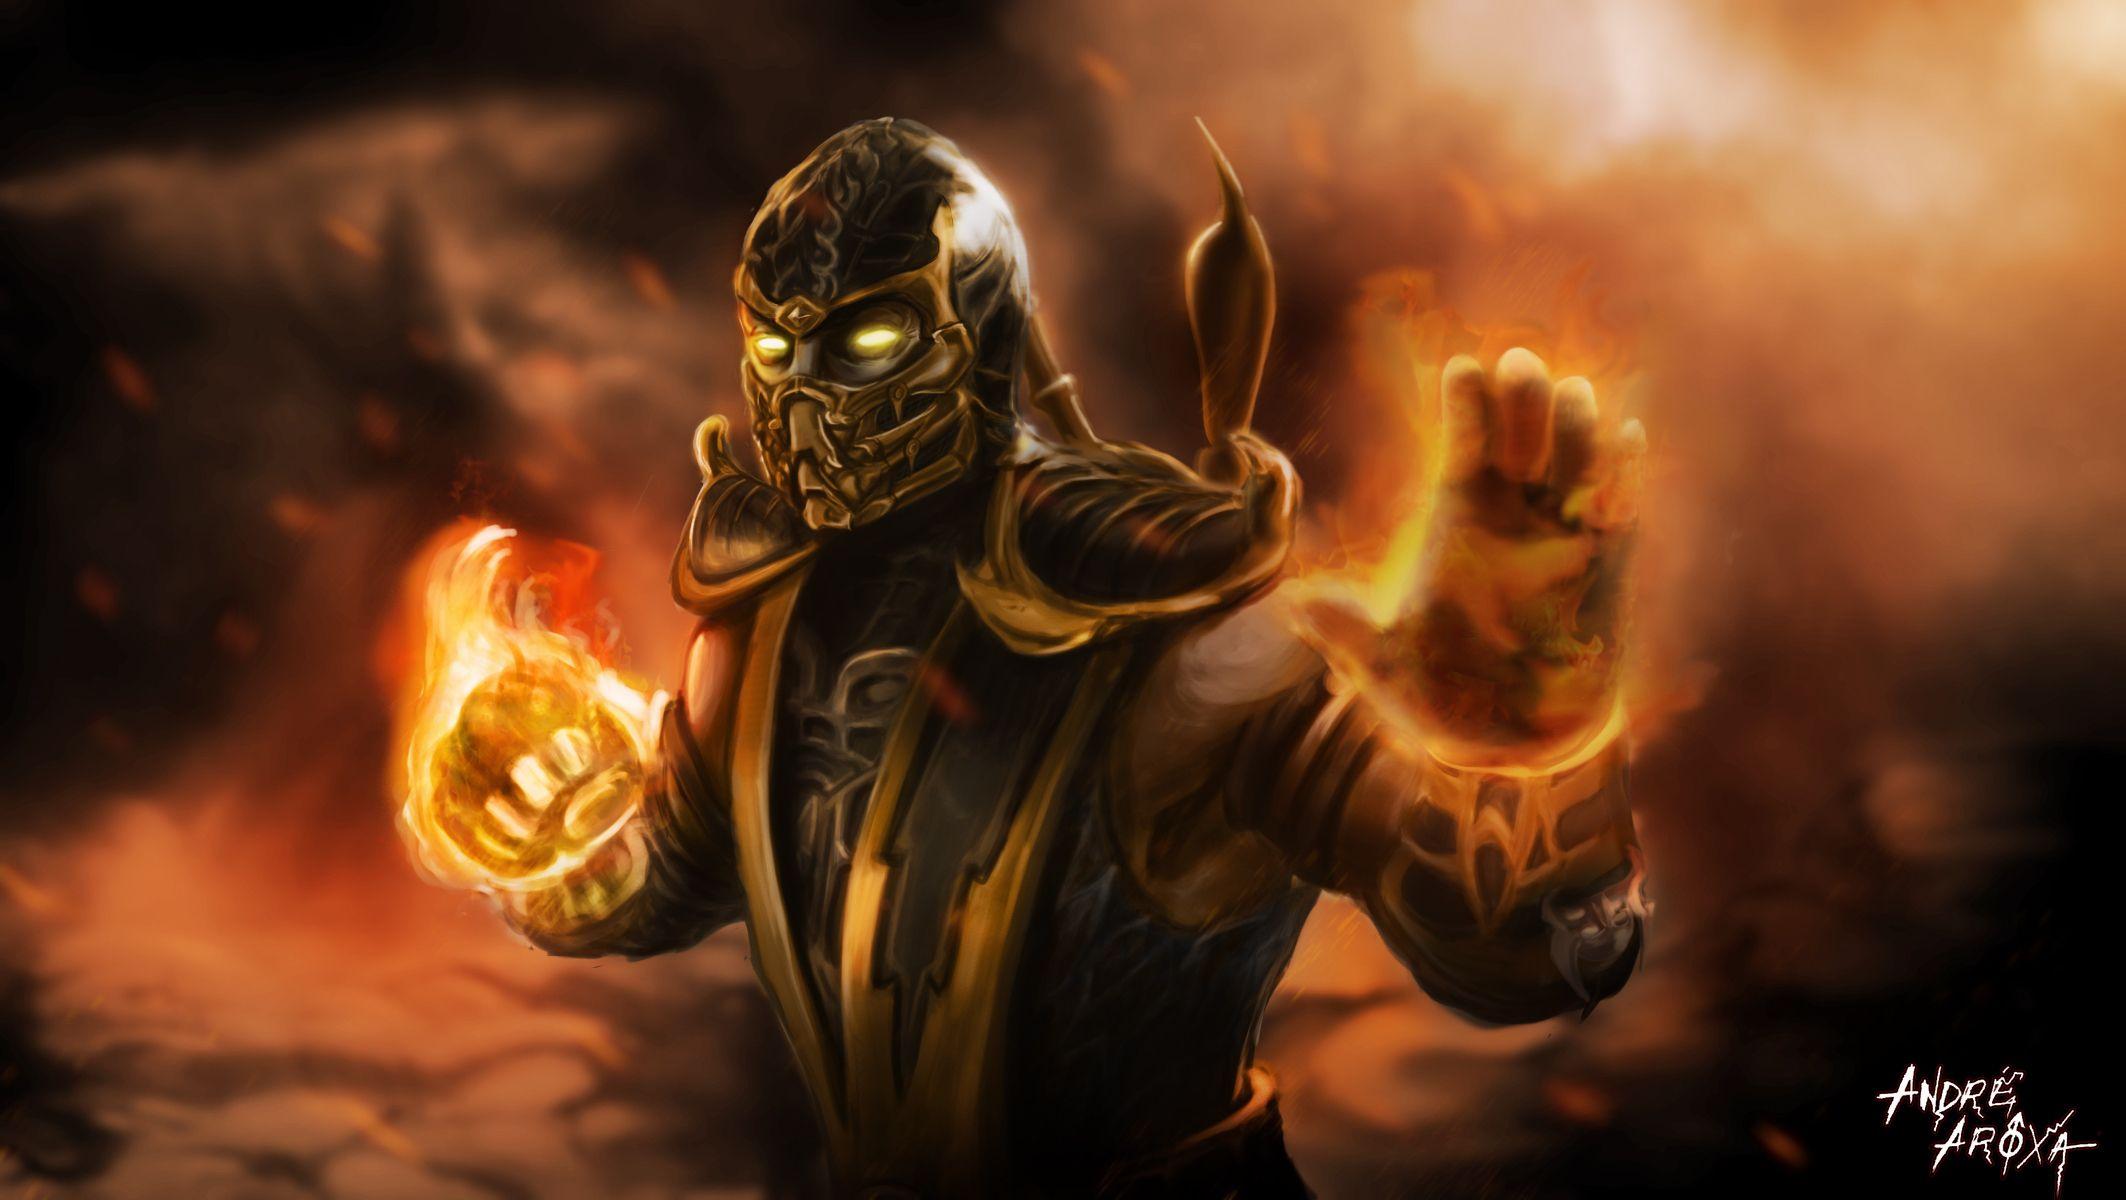 Mortal Kombat HD Wallpaper and Background Image